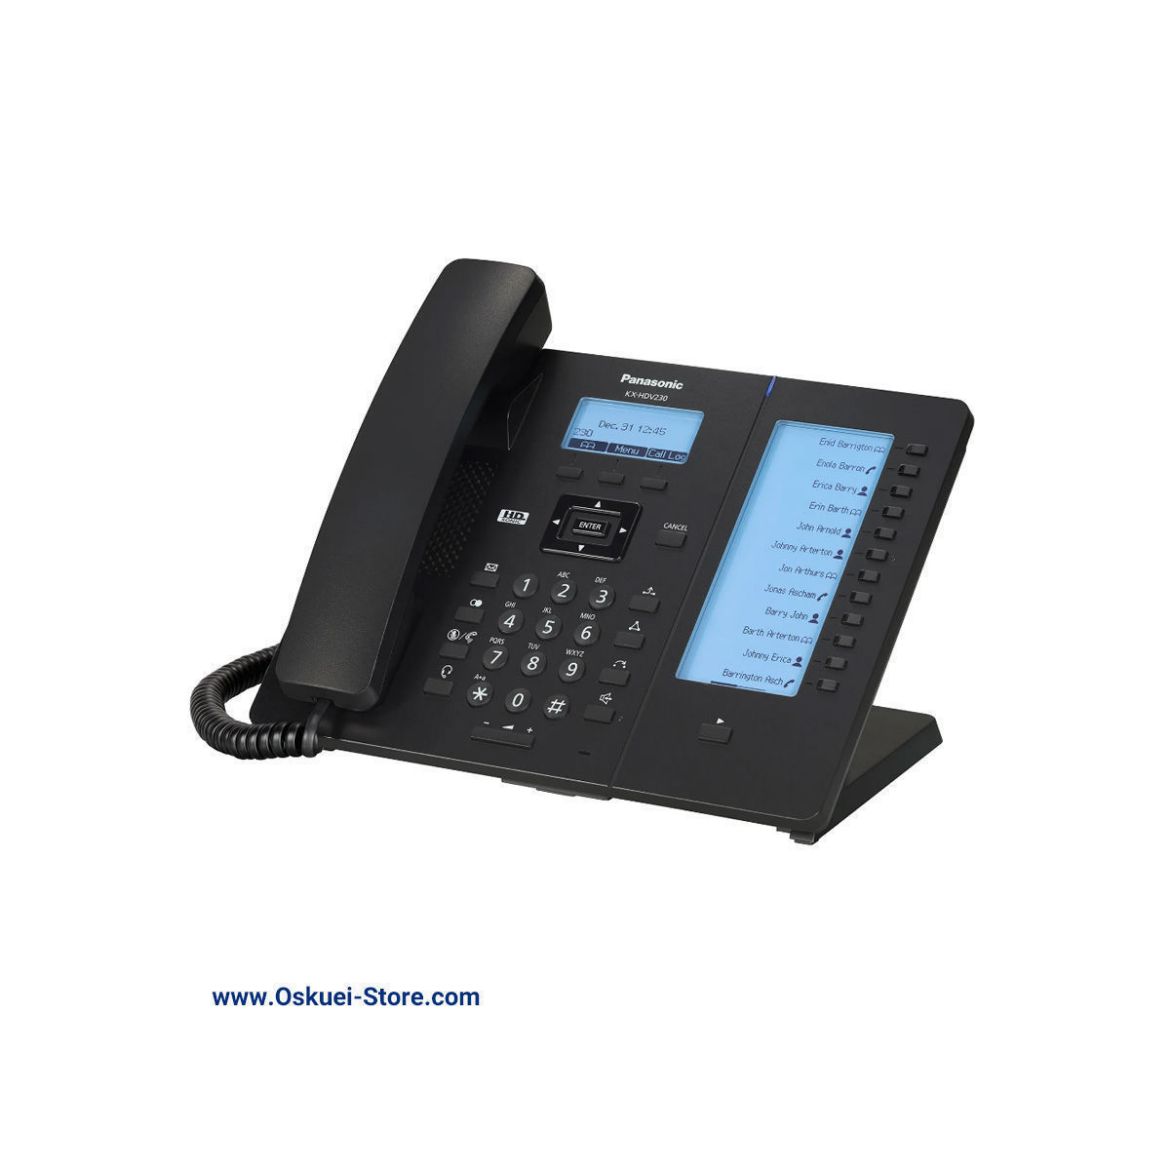 Panasonic KX-HDV230 VoIP SIP Telephone Black Right